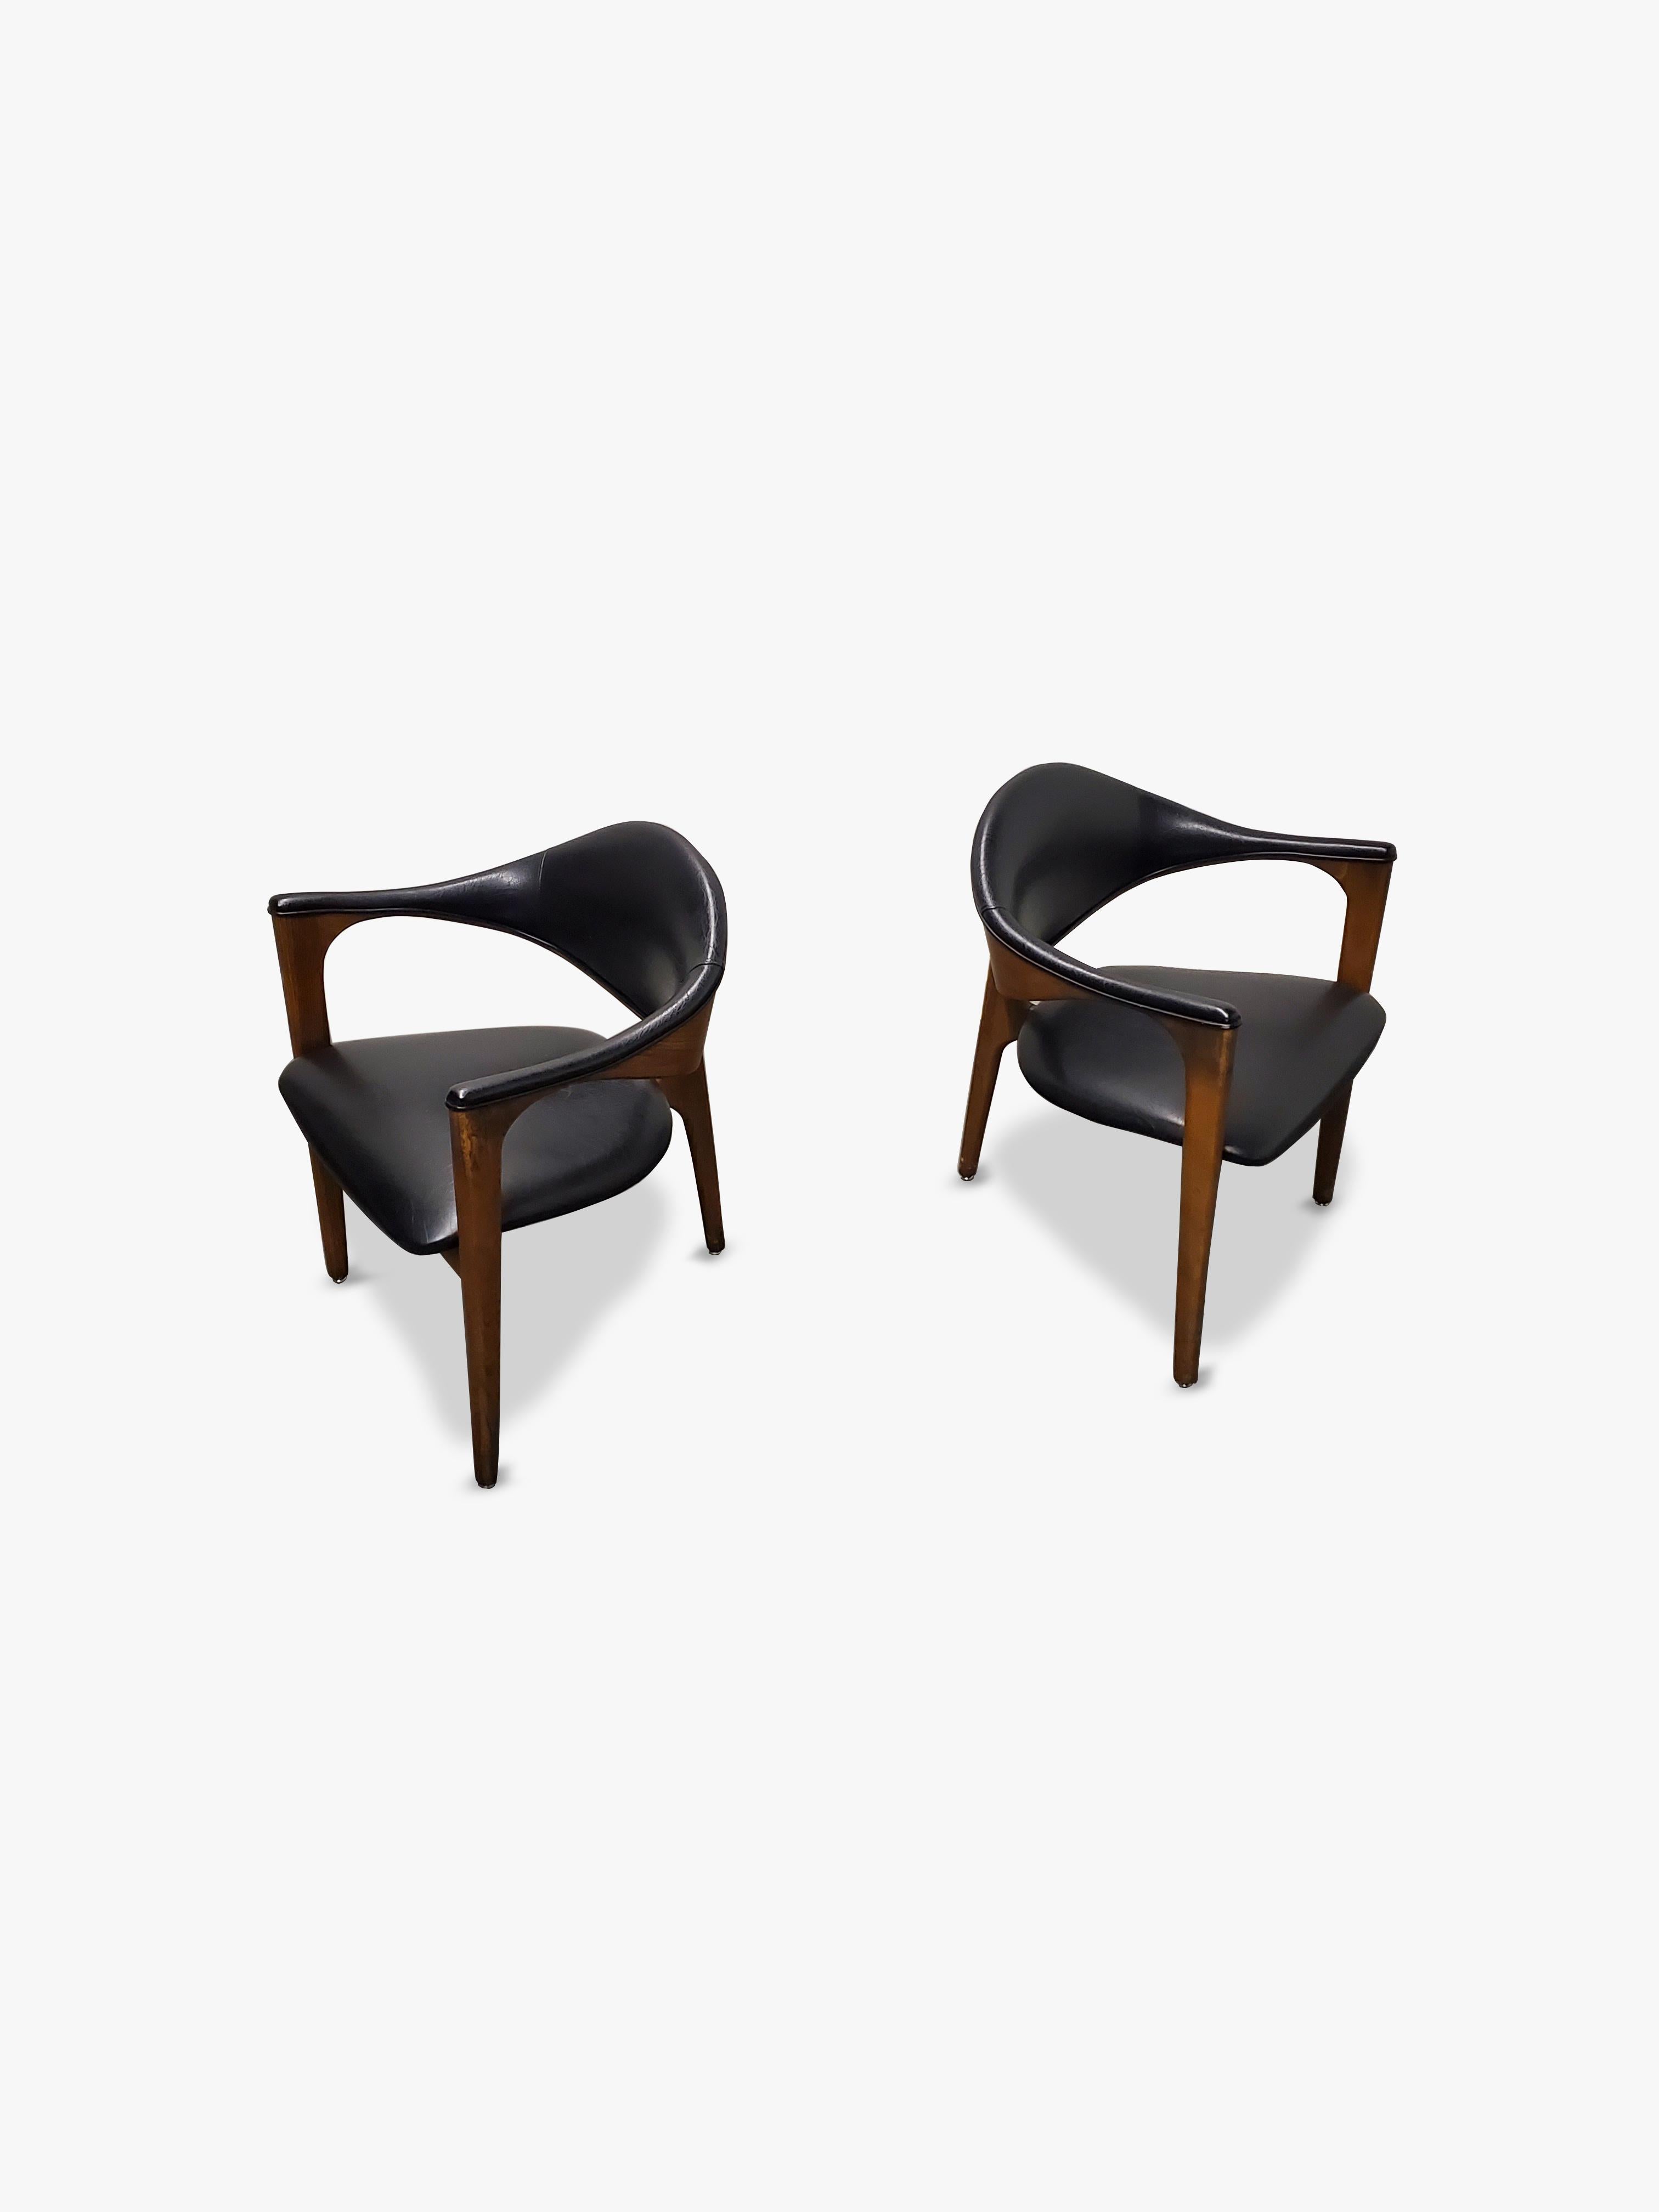 North American Pair of Mid-Century Modern Three-Legged Chairs